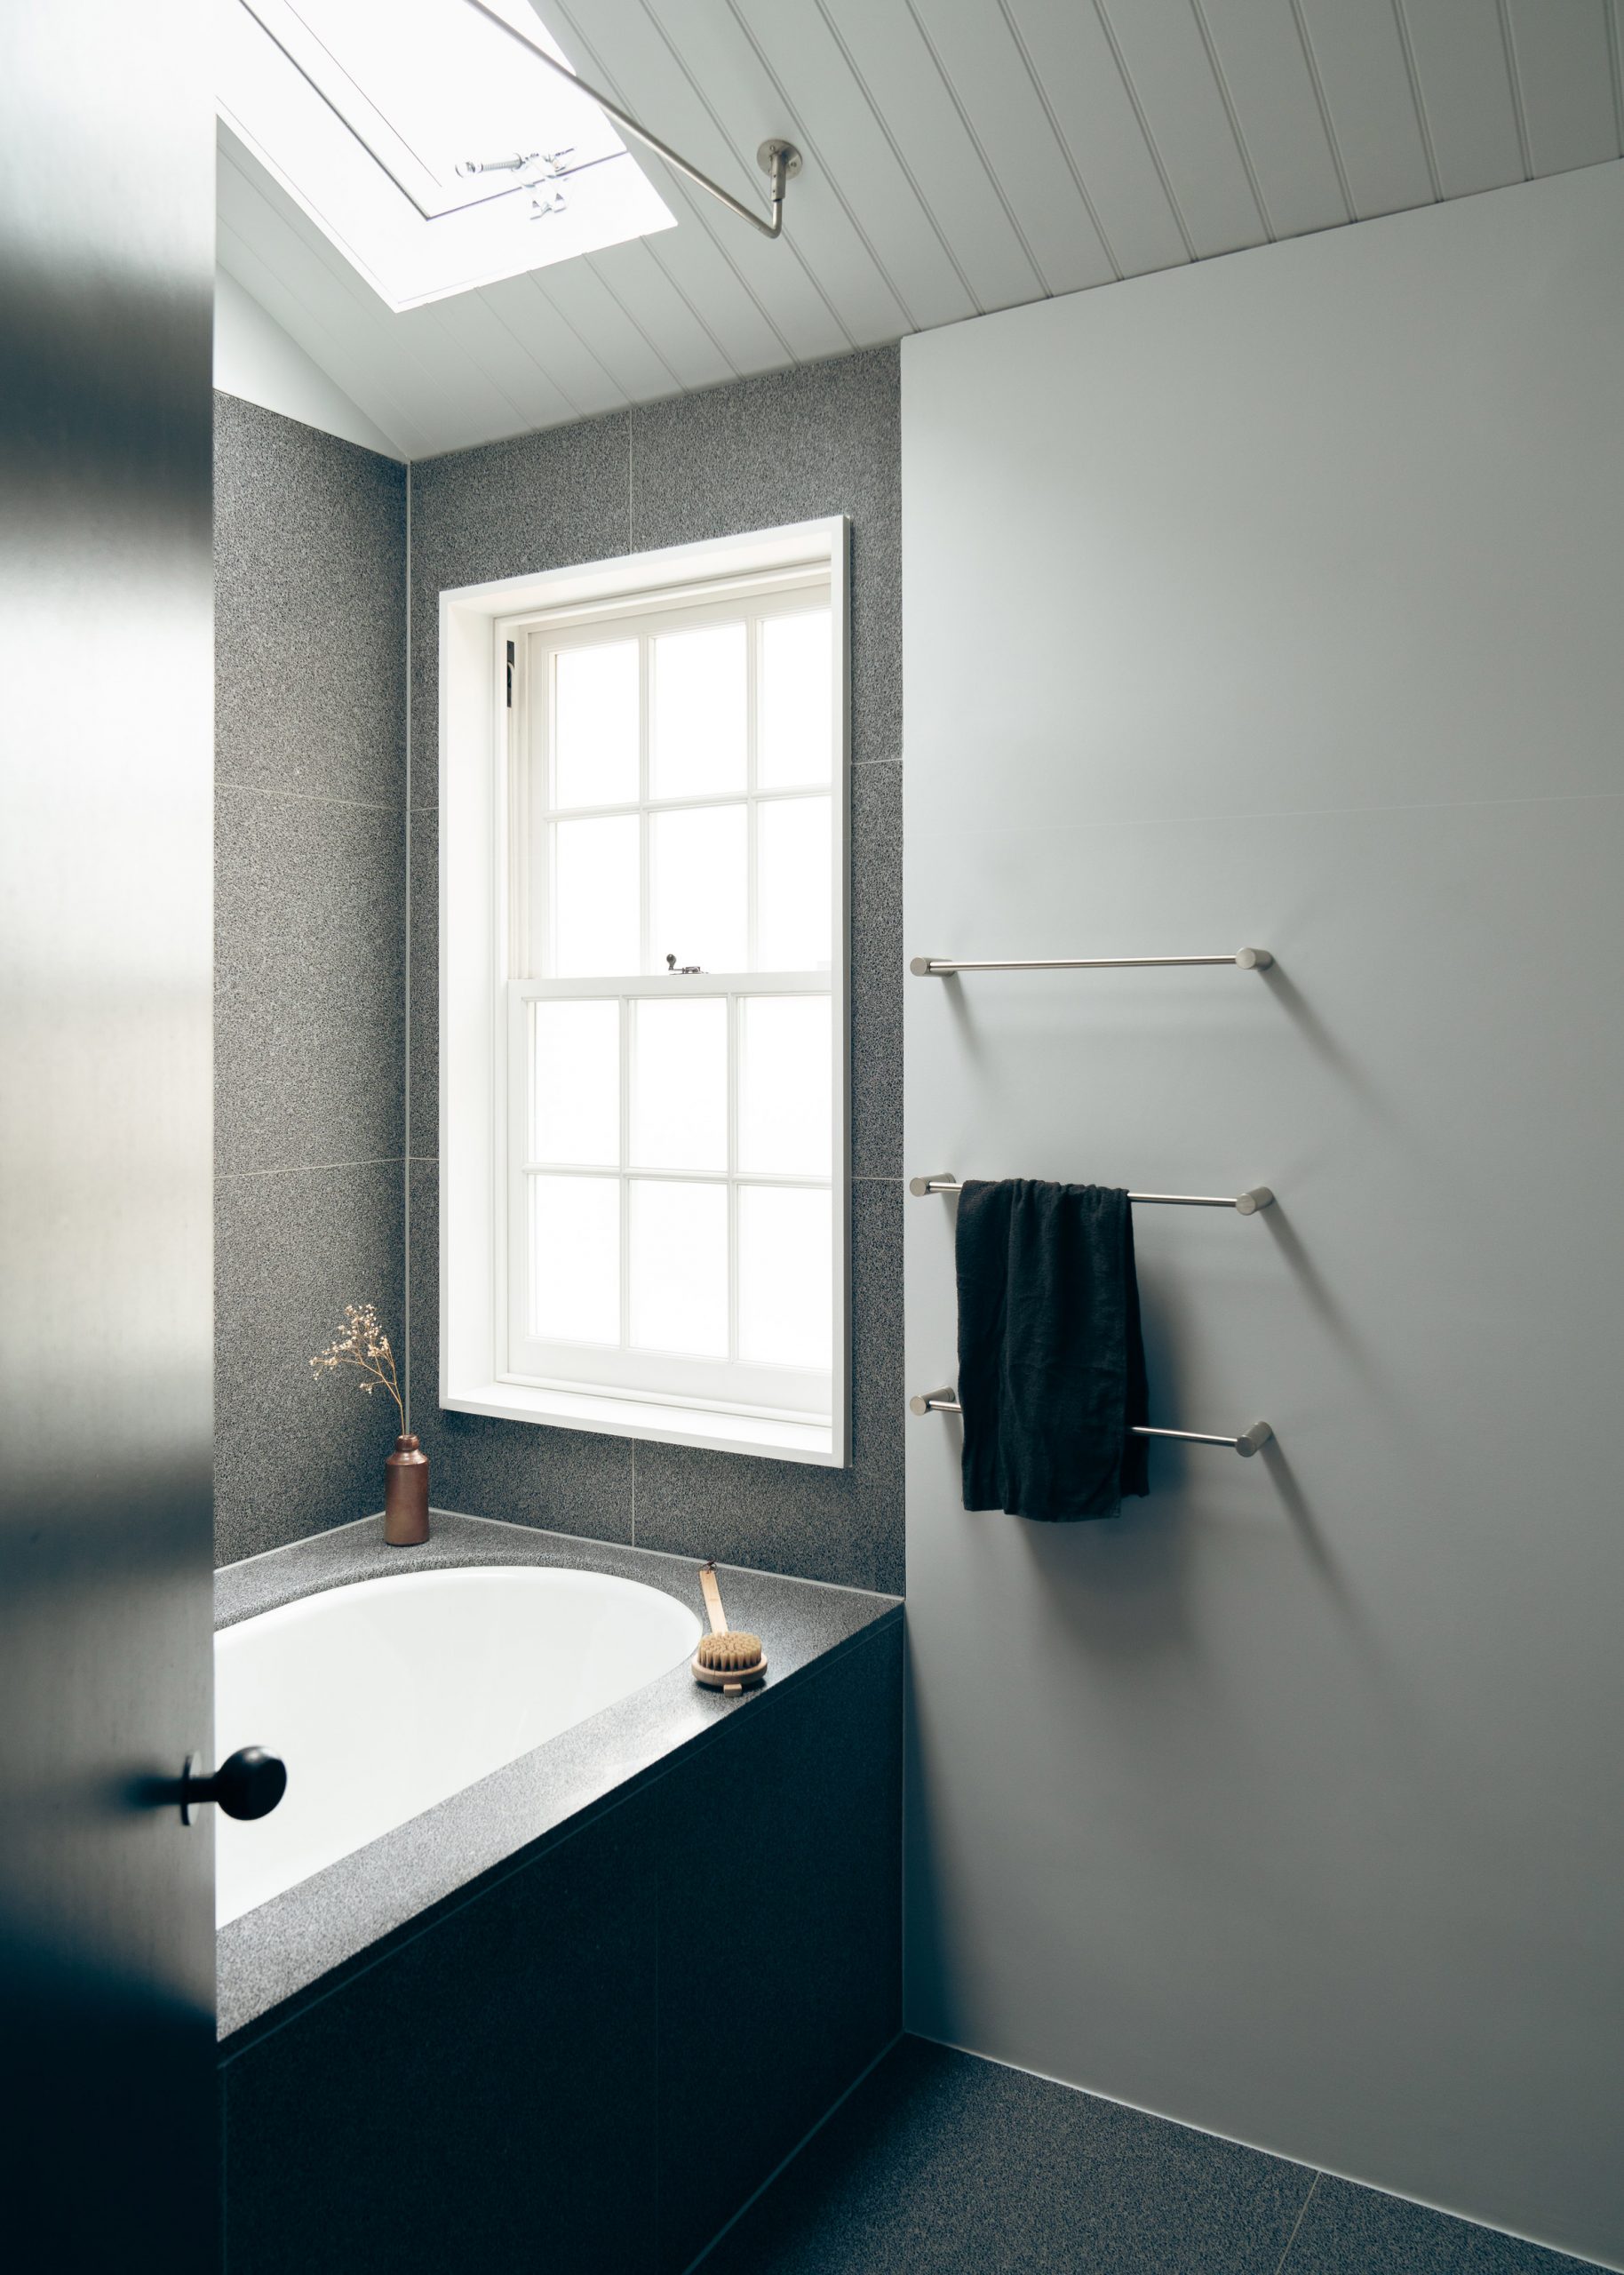 The bathroom in Concrete Plinth House employs a dark grey palette